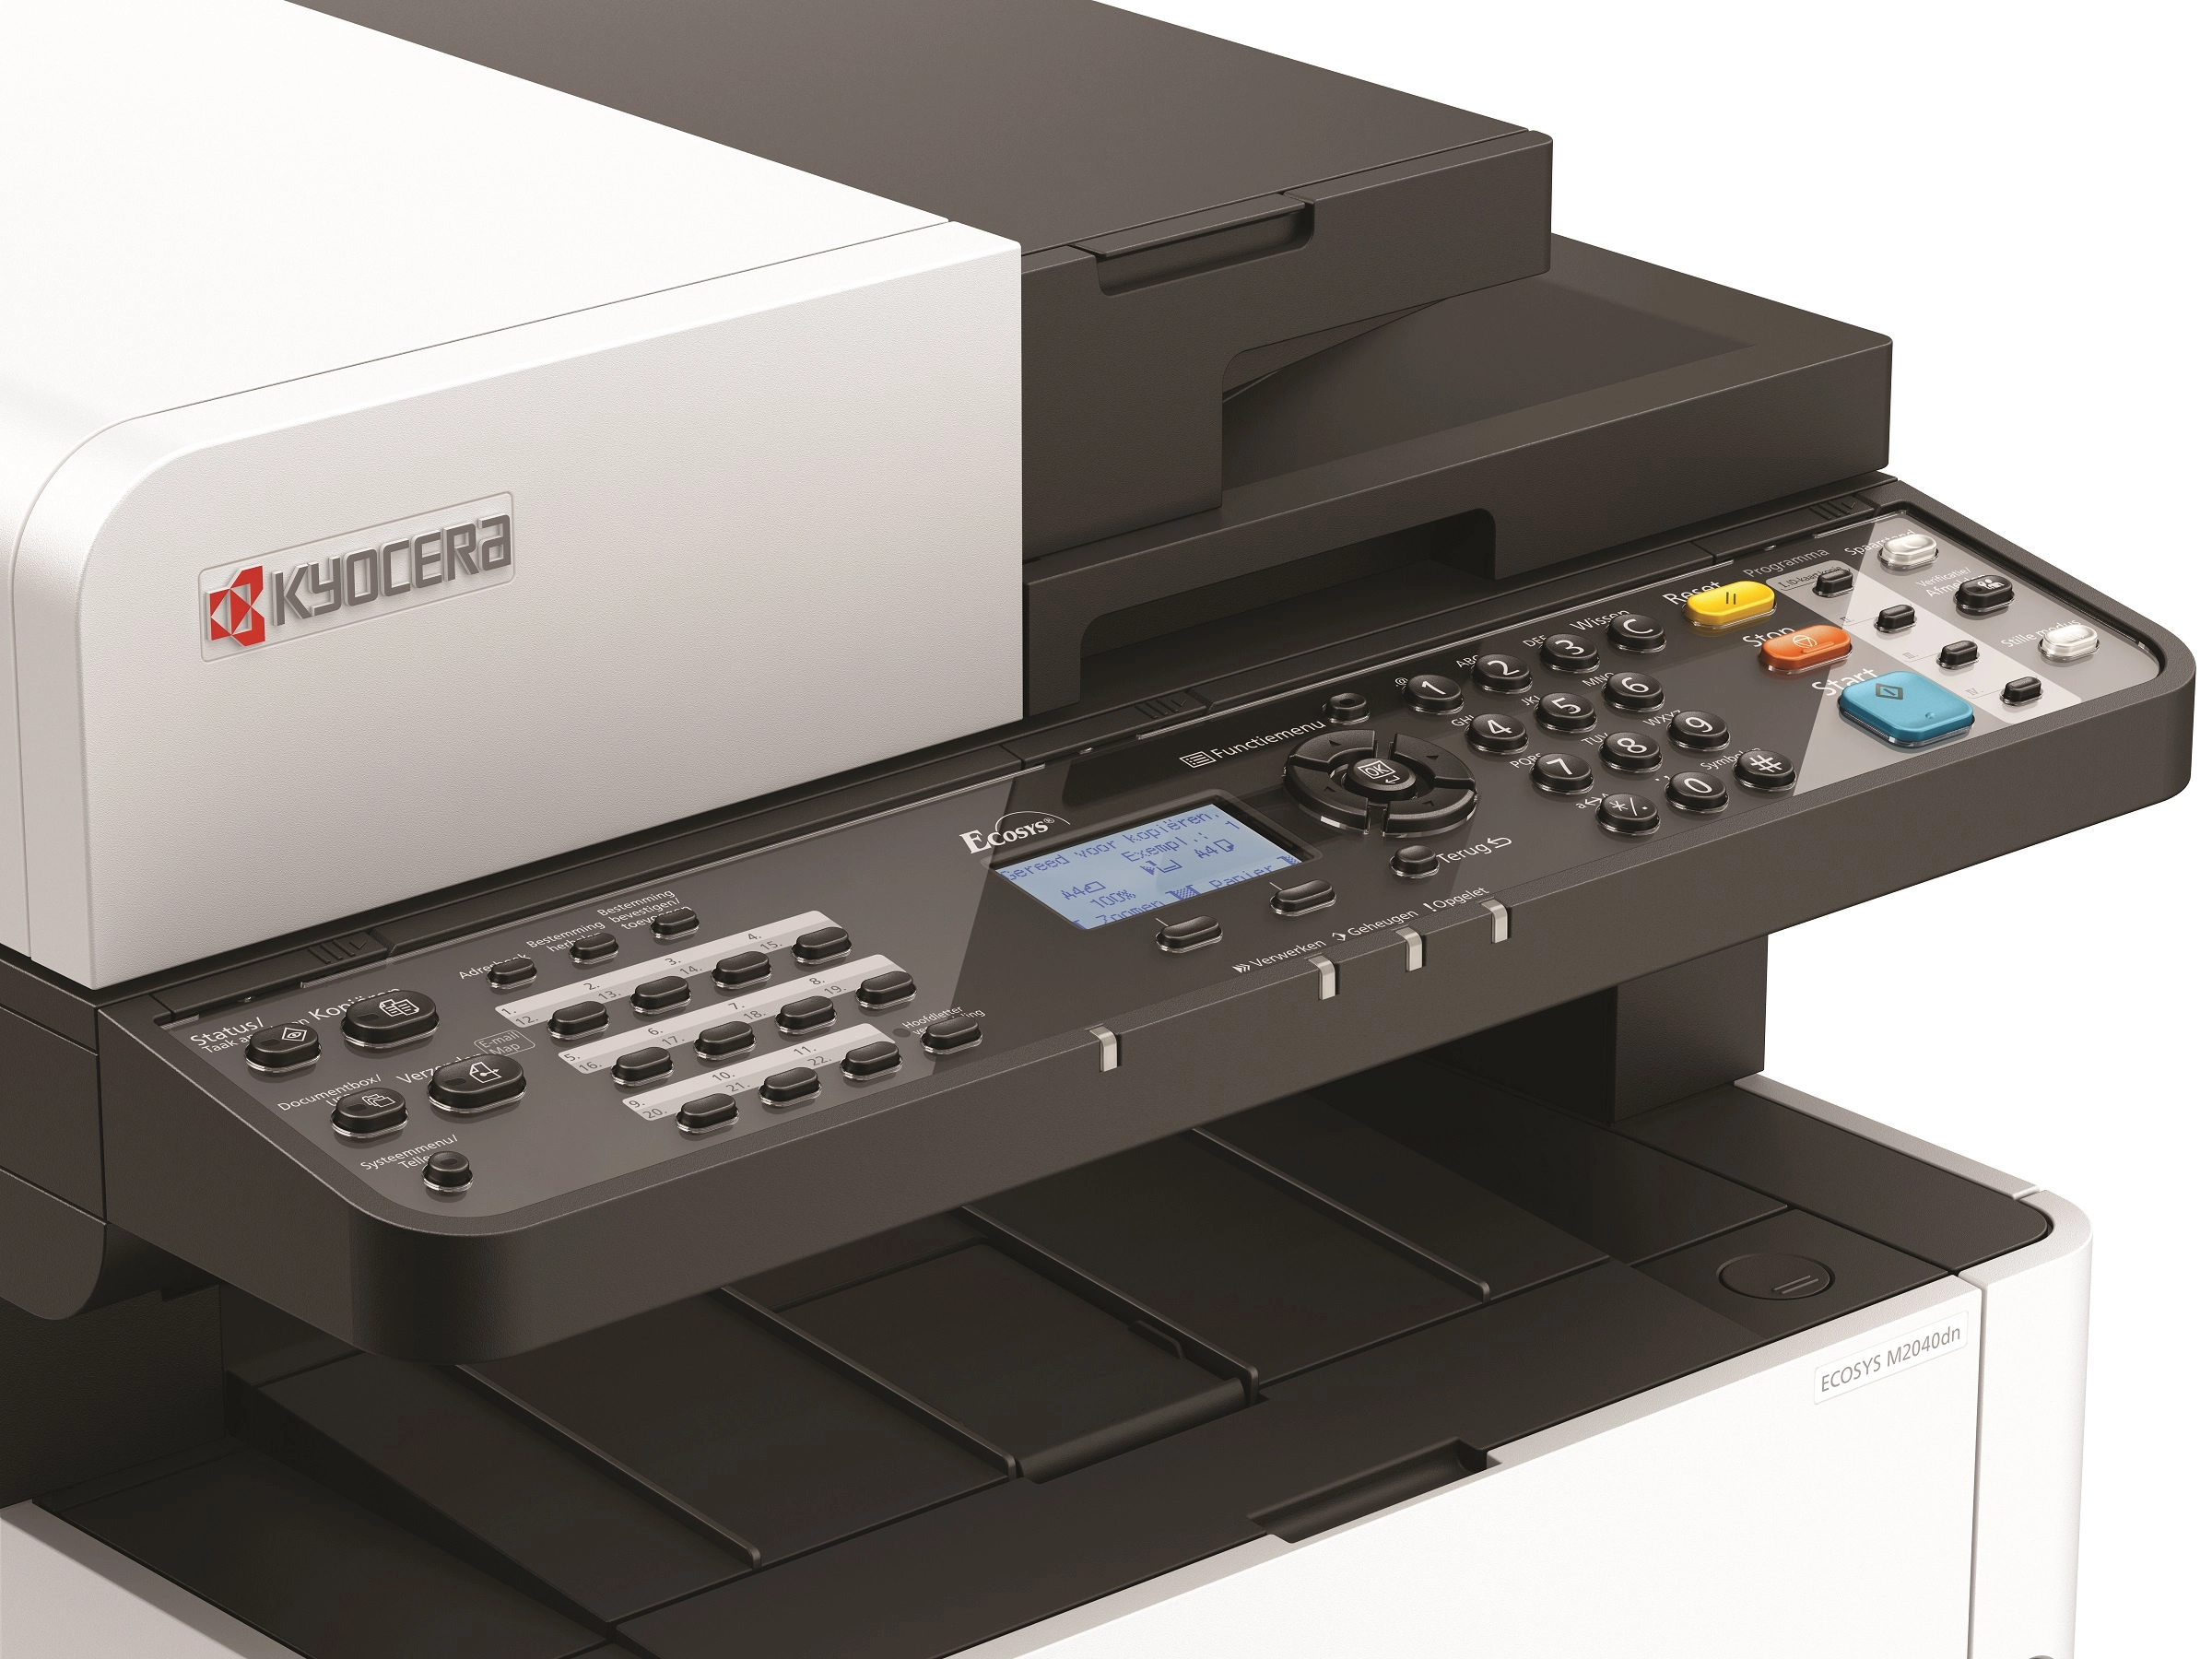 Kyocera ECOSYS M2040dn - Multifunktionsdrucker - s/w - Laser